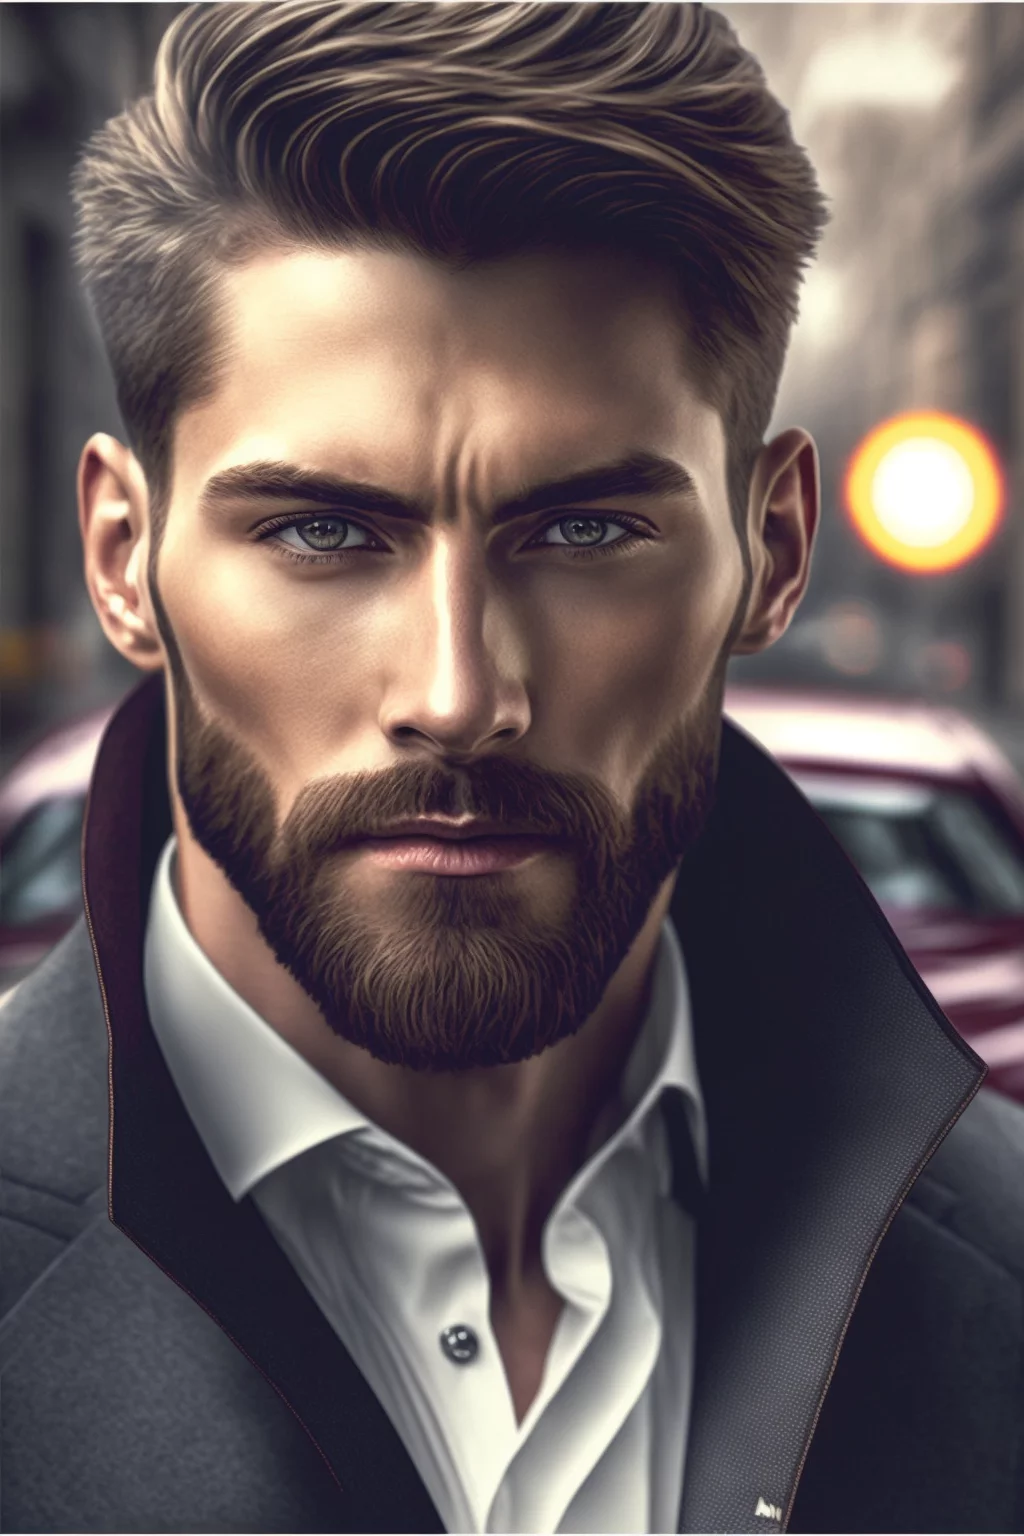 Most beautiful man athletic blue eyes beard classy clothes luxury car